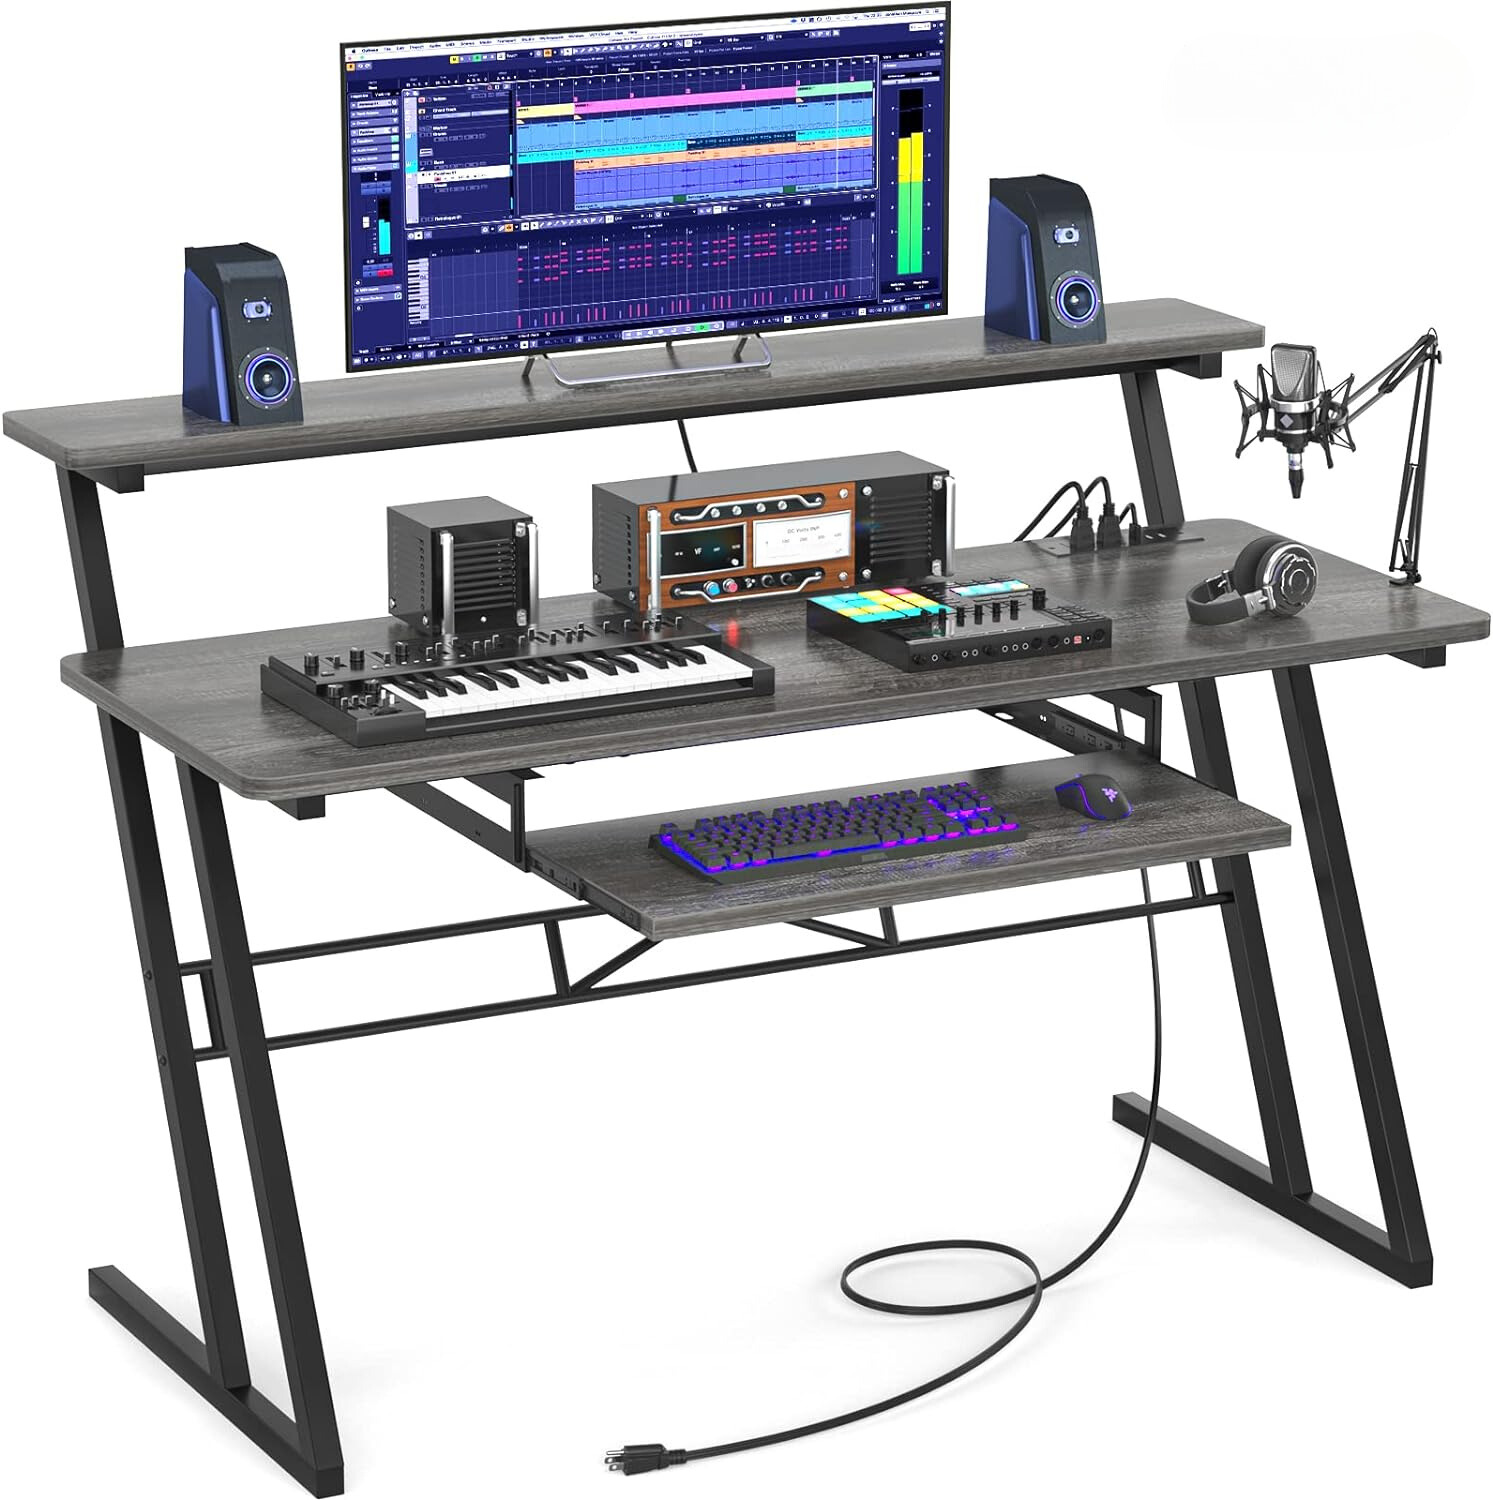 armocity 47'' Music Studio Desk- product shot